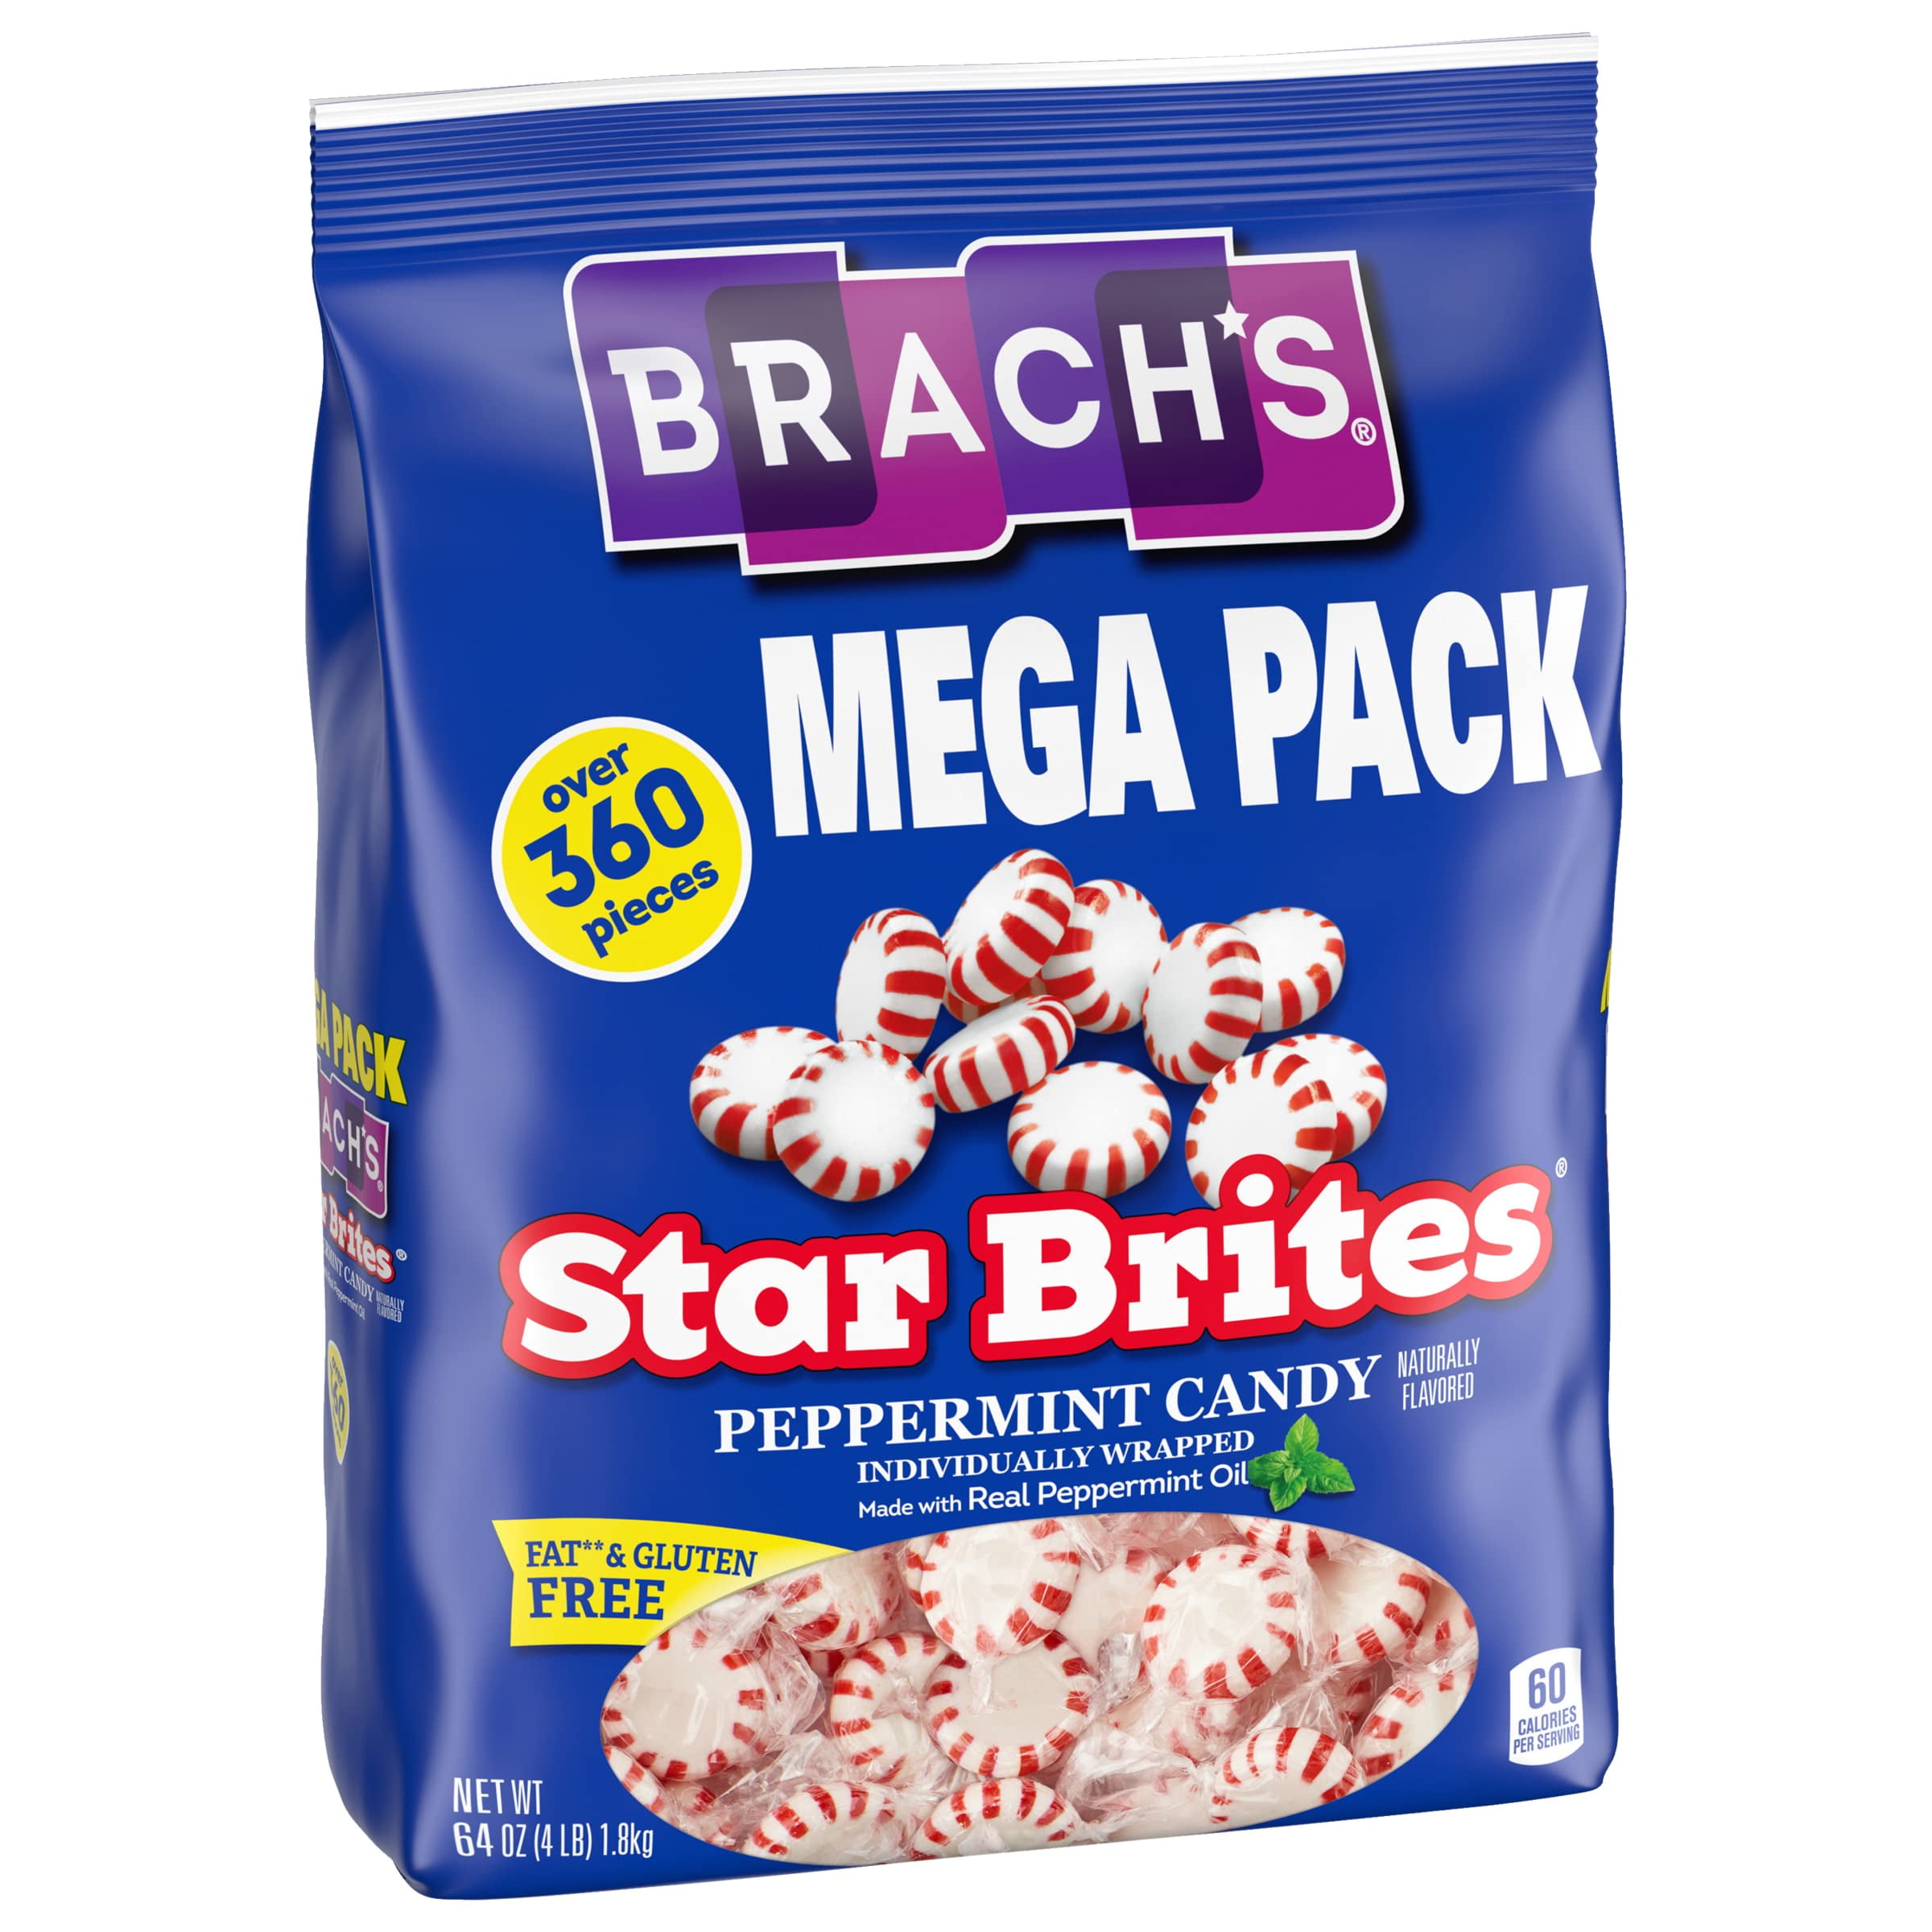 Indulge in Brach's Star Brites Peppermint Candy - A Mega Pack of